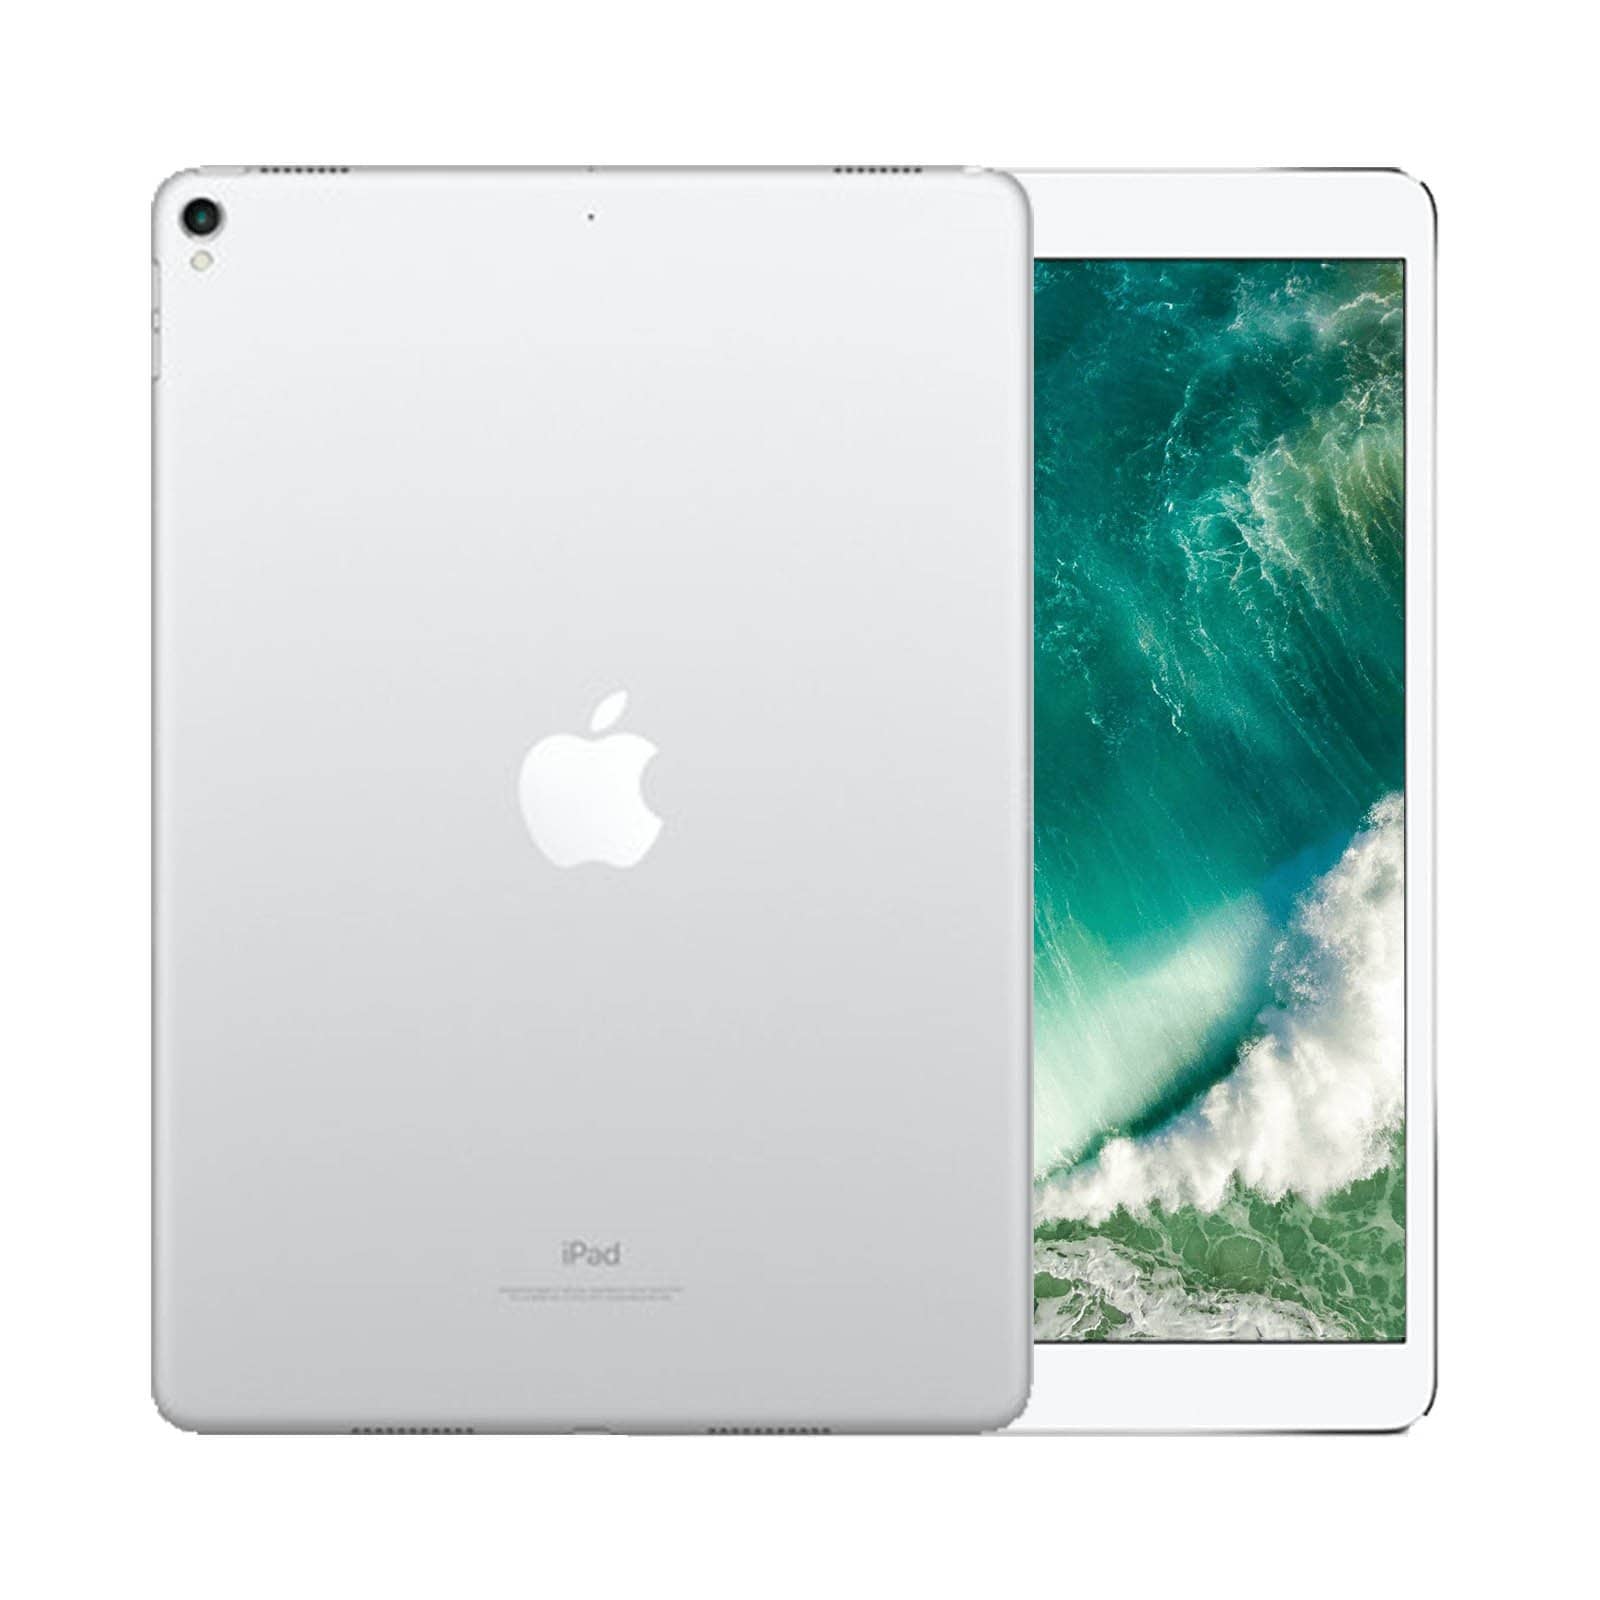 iPad Pro 10.5 Inch 256GB Silver Very Good - WiFi 256GB Silver Very Good